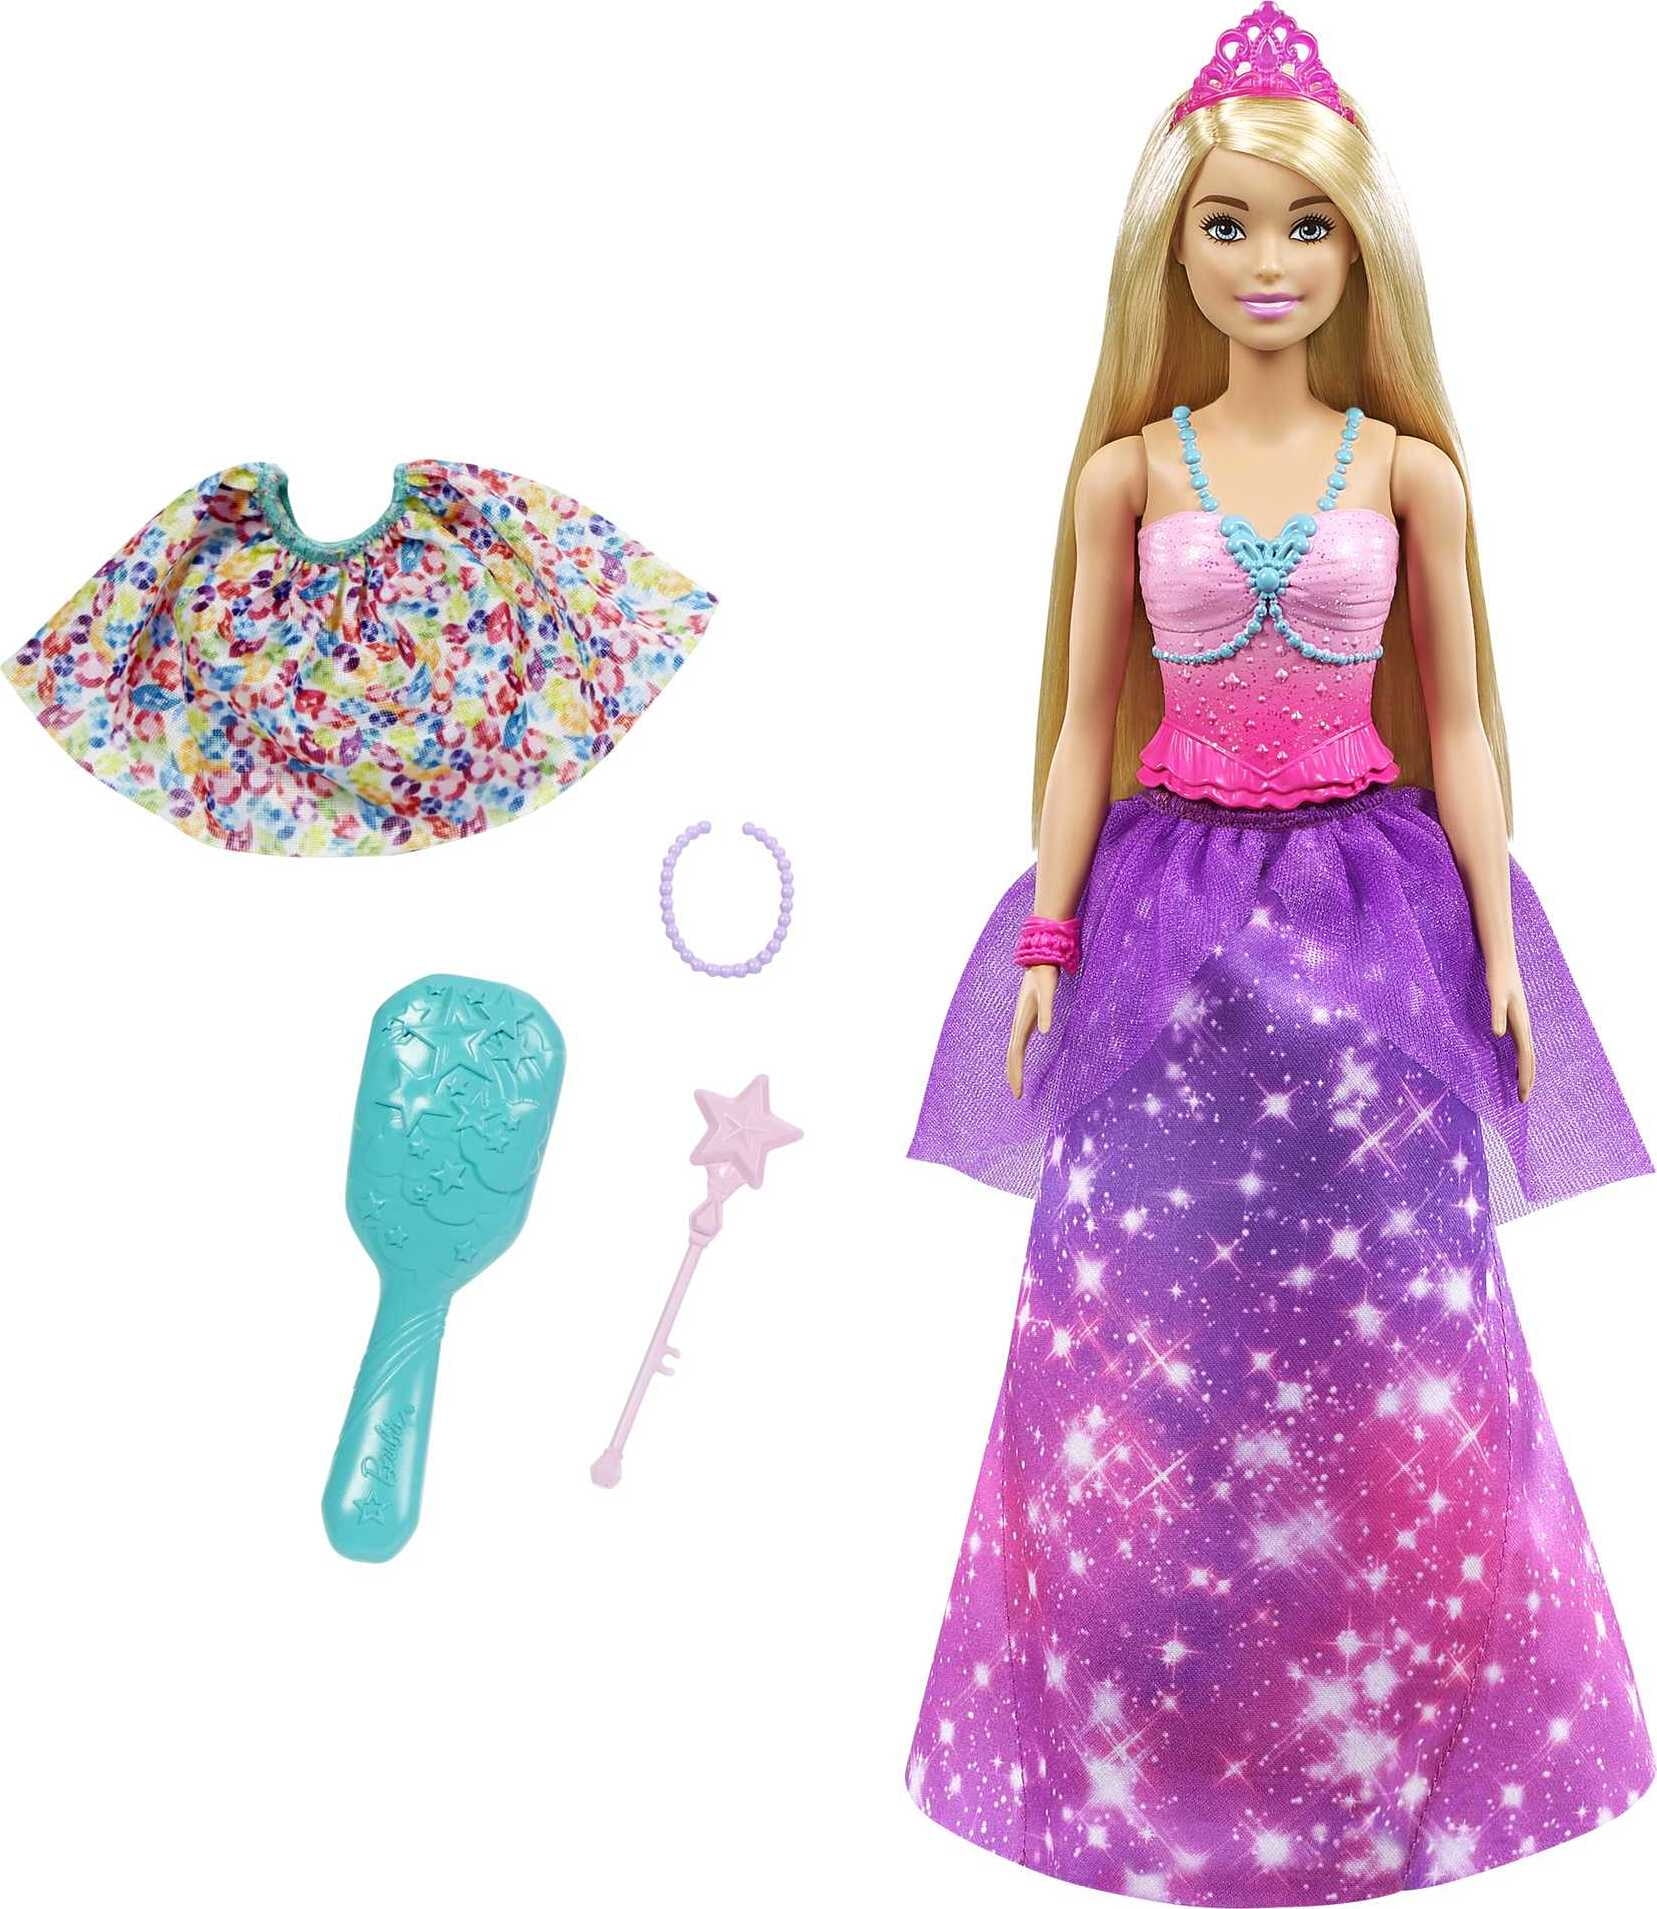 Barbie Dreamtopia Fairytale Doll, 2-in-1 Royal Mermaid Transformation with Accessories - Walmart.com